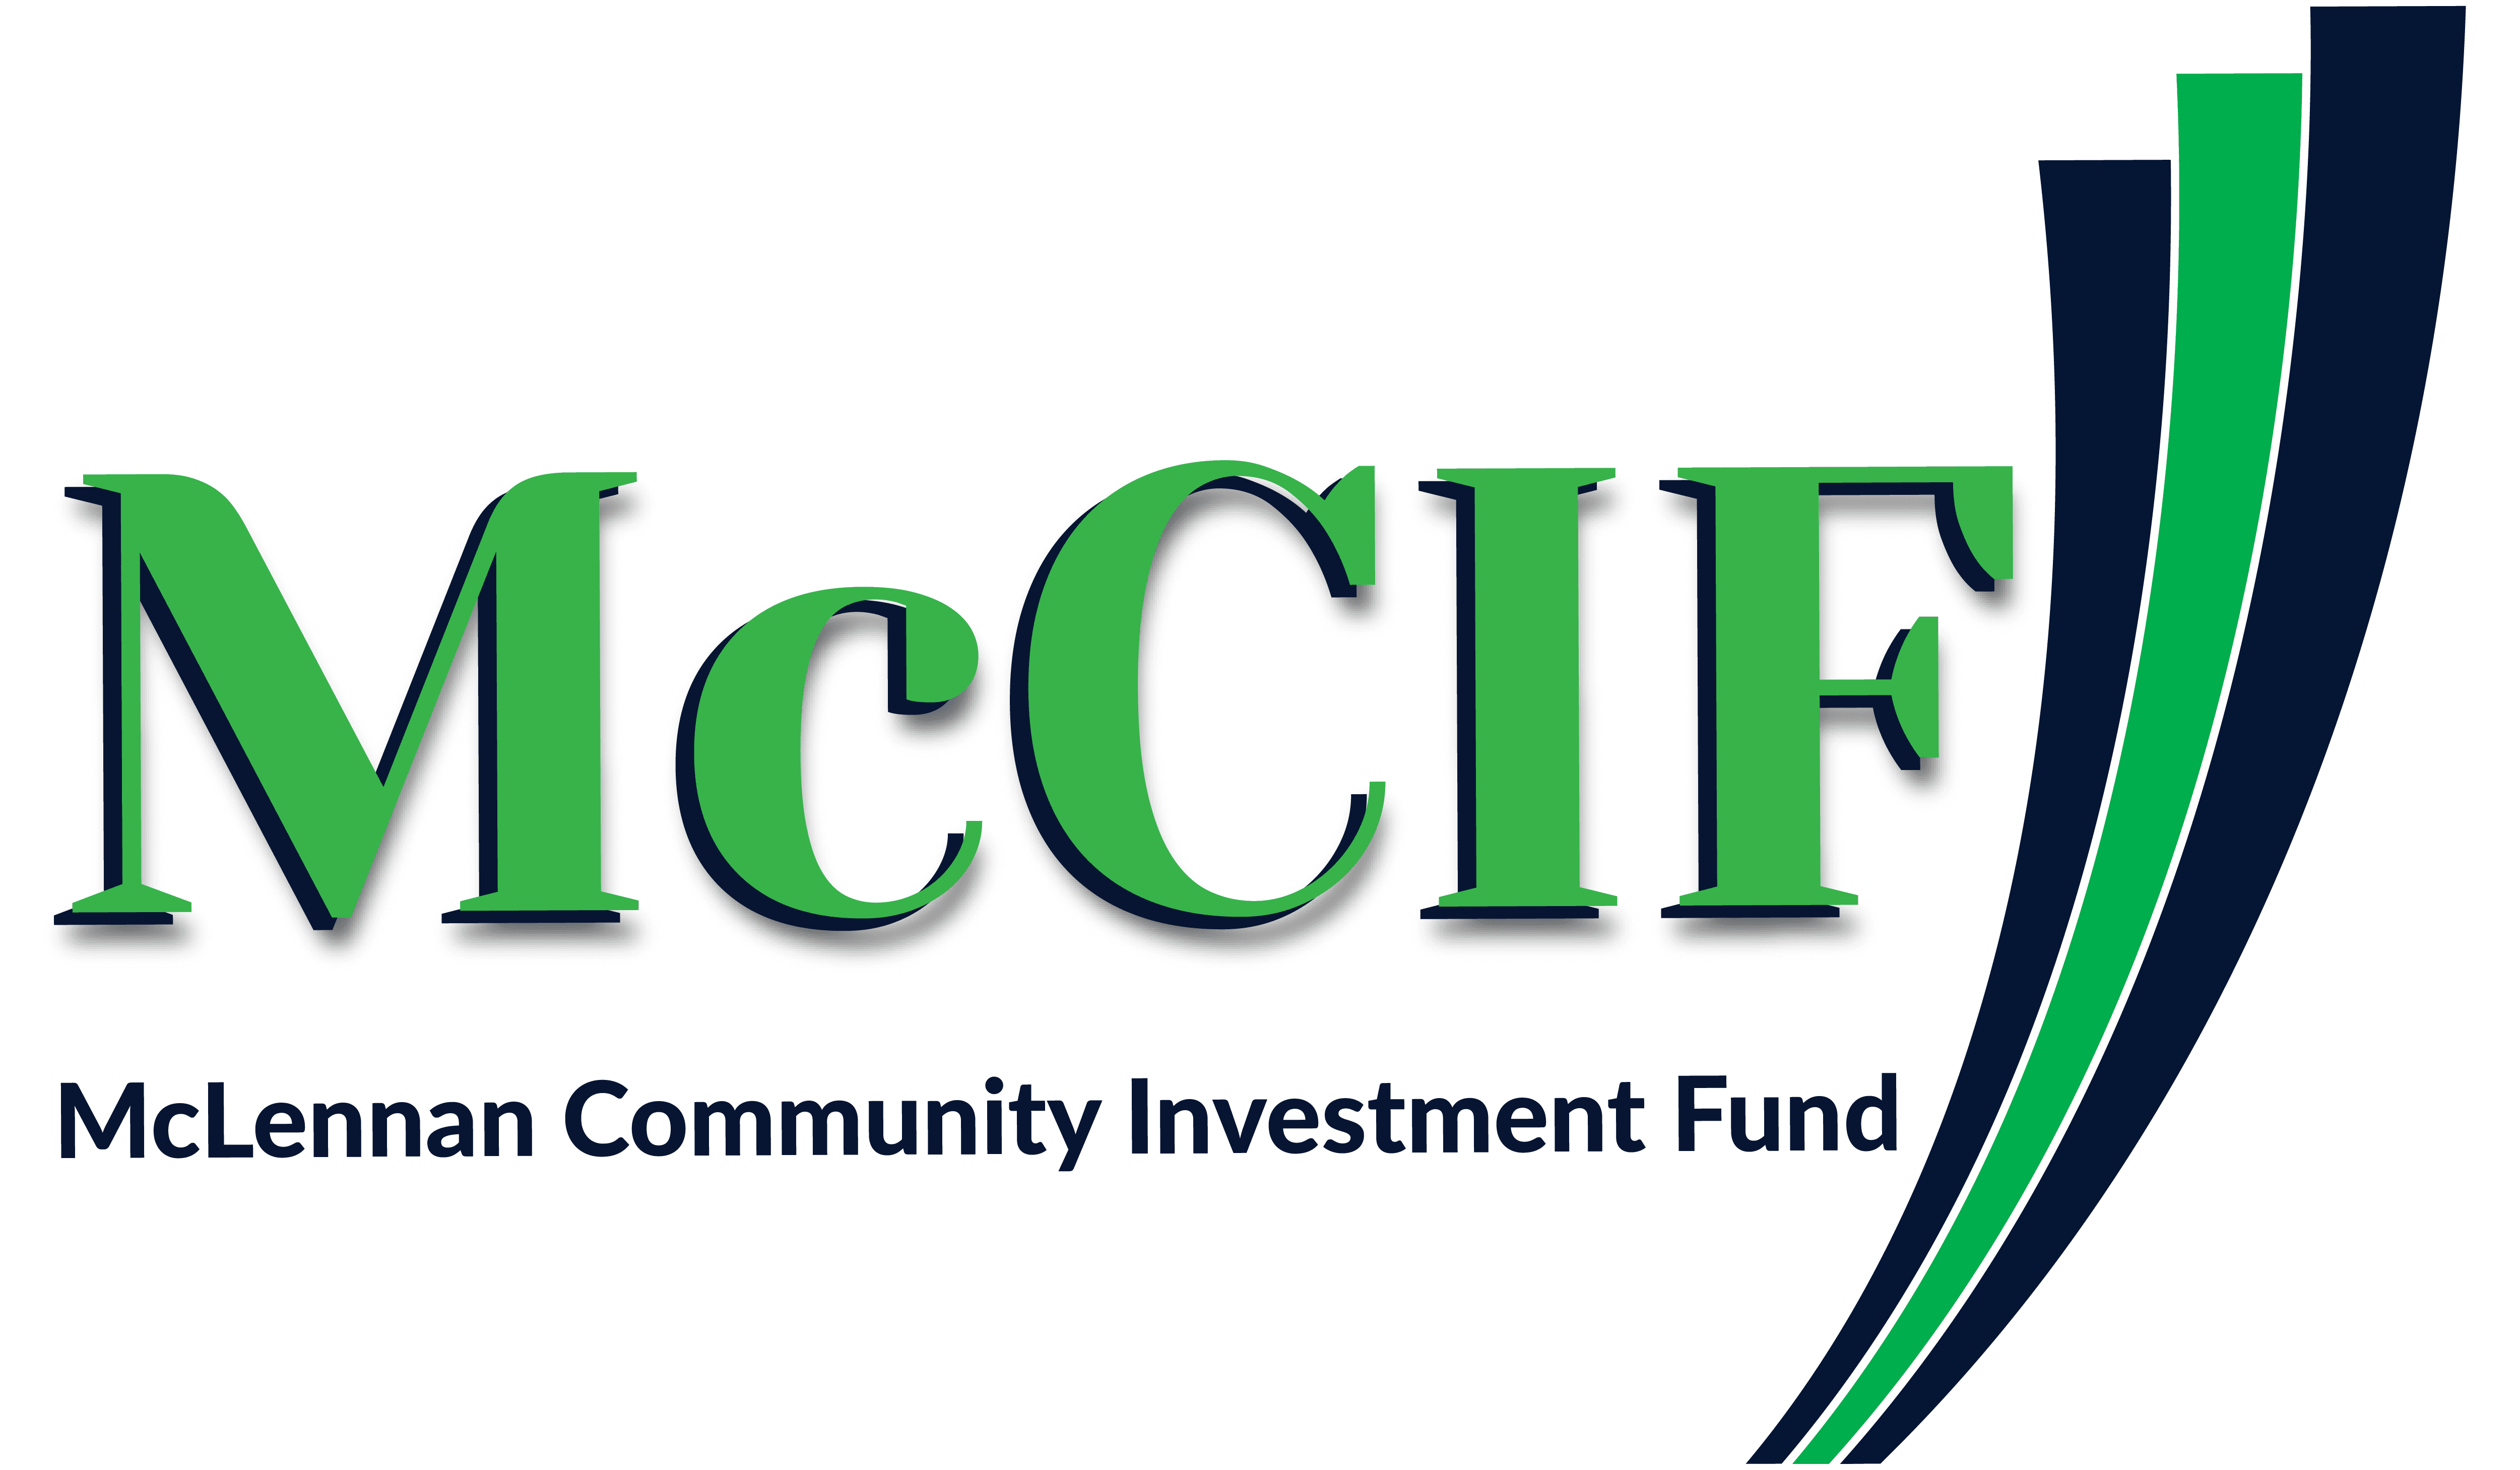 Community Investment